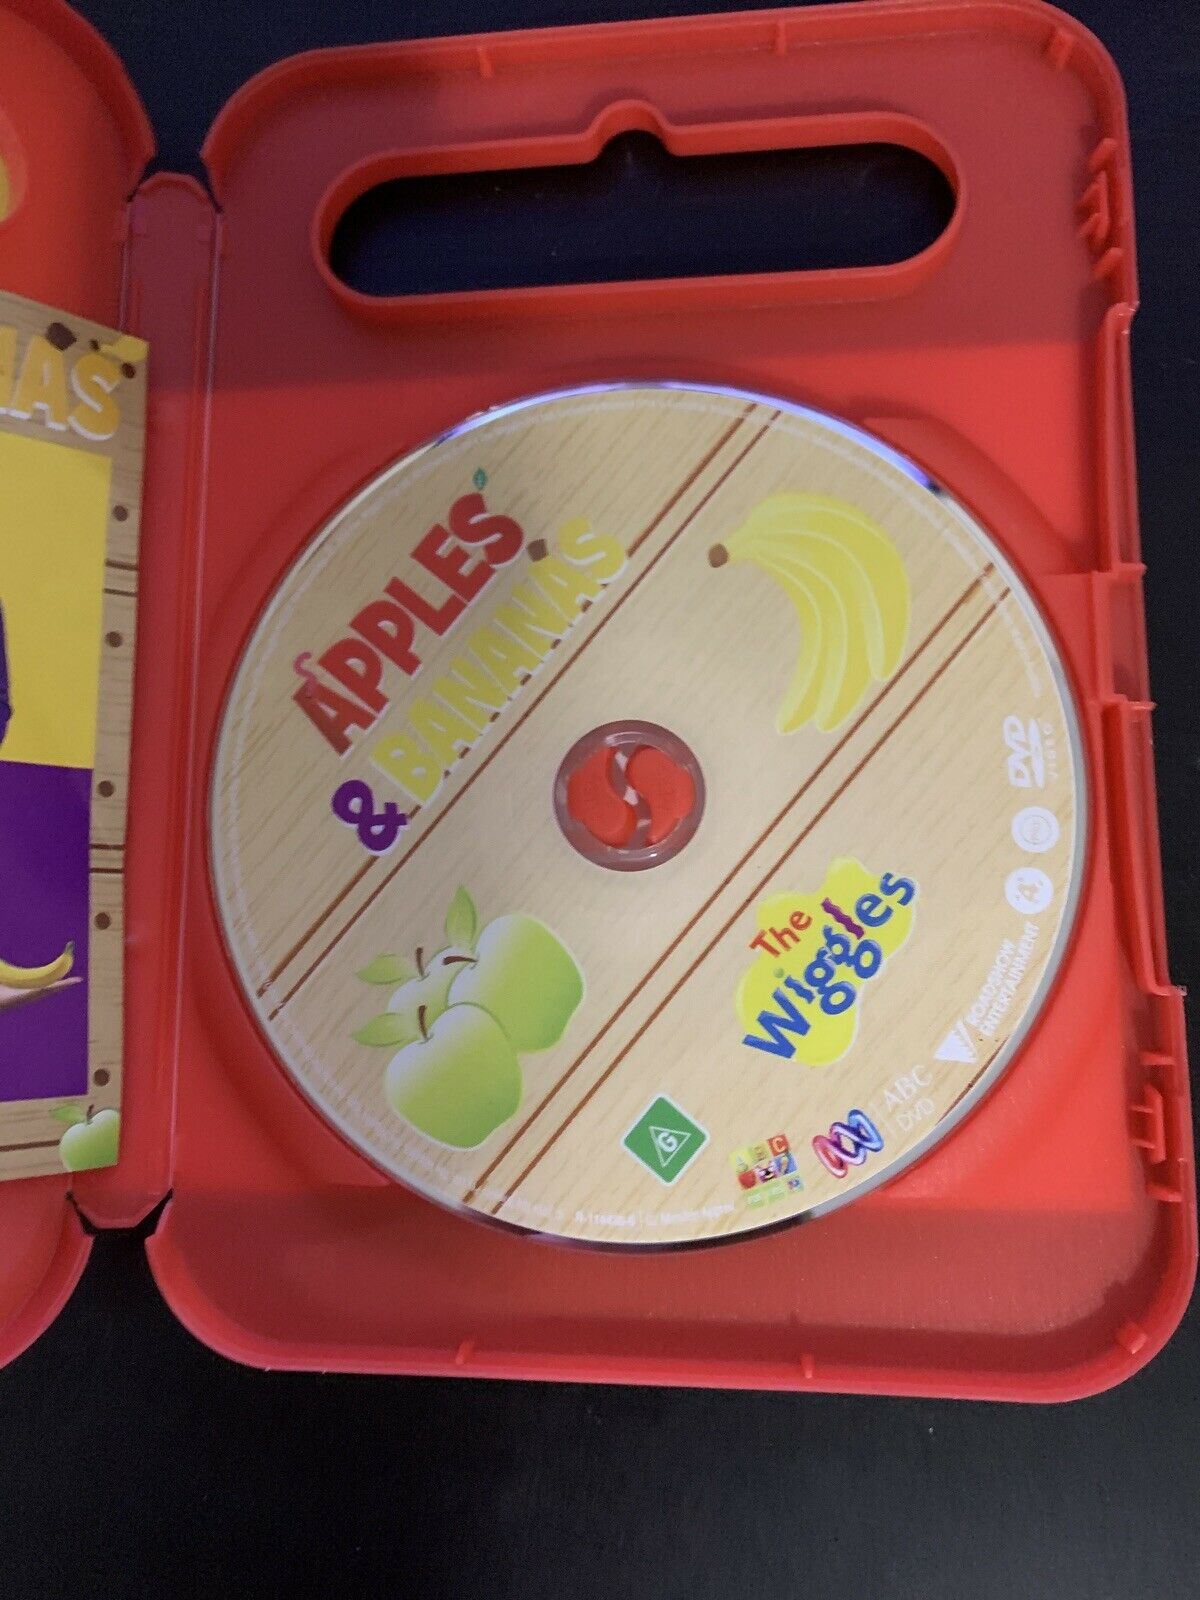 2x The Wiggles - Go Bananas! & Apples & Bananas DVD Region 4 - ABC For Kids R4